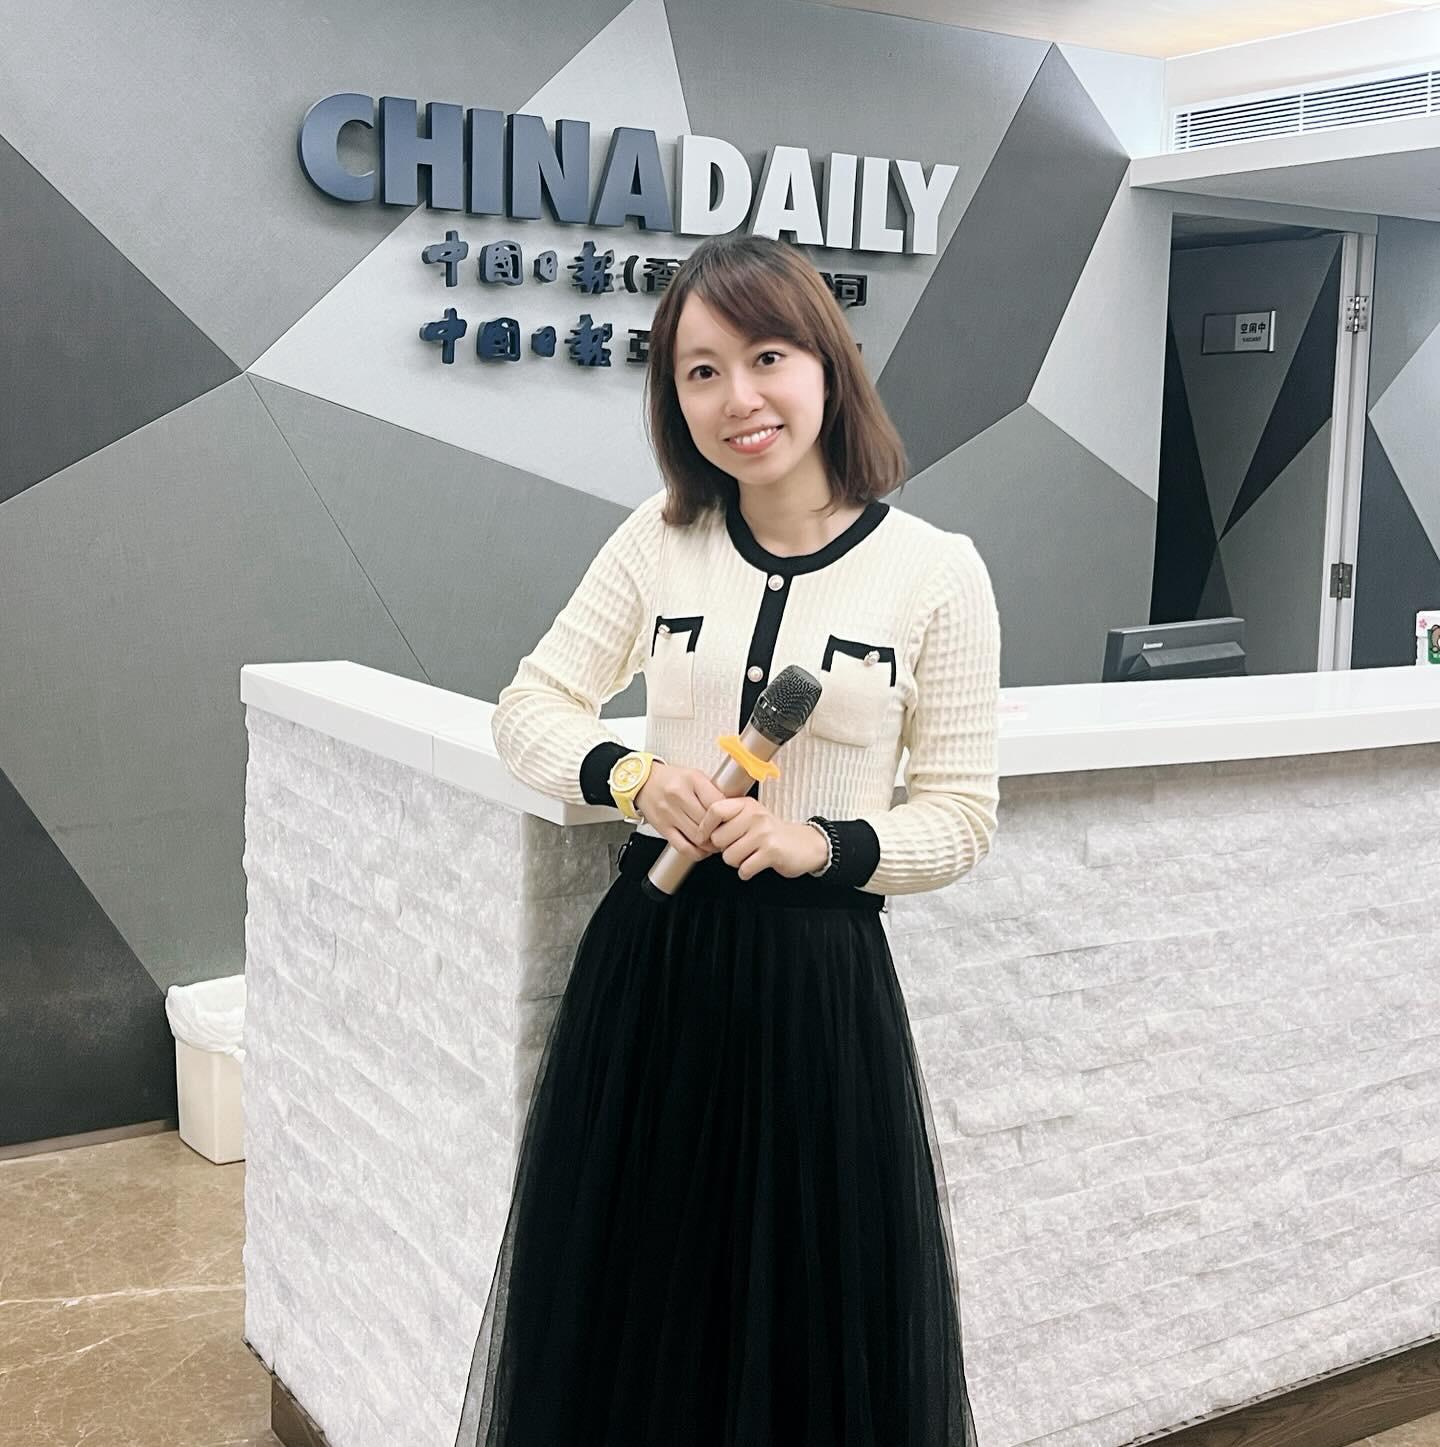 VIVIAN 曾子晴司儀工作紀錄: China Daily 交流團口才與新媒體分享嘉賓